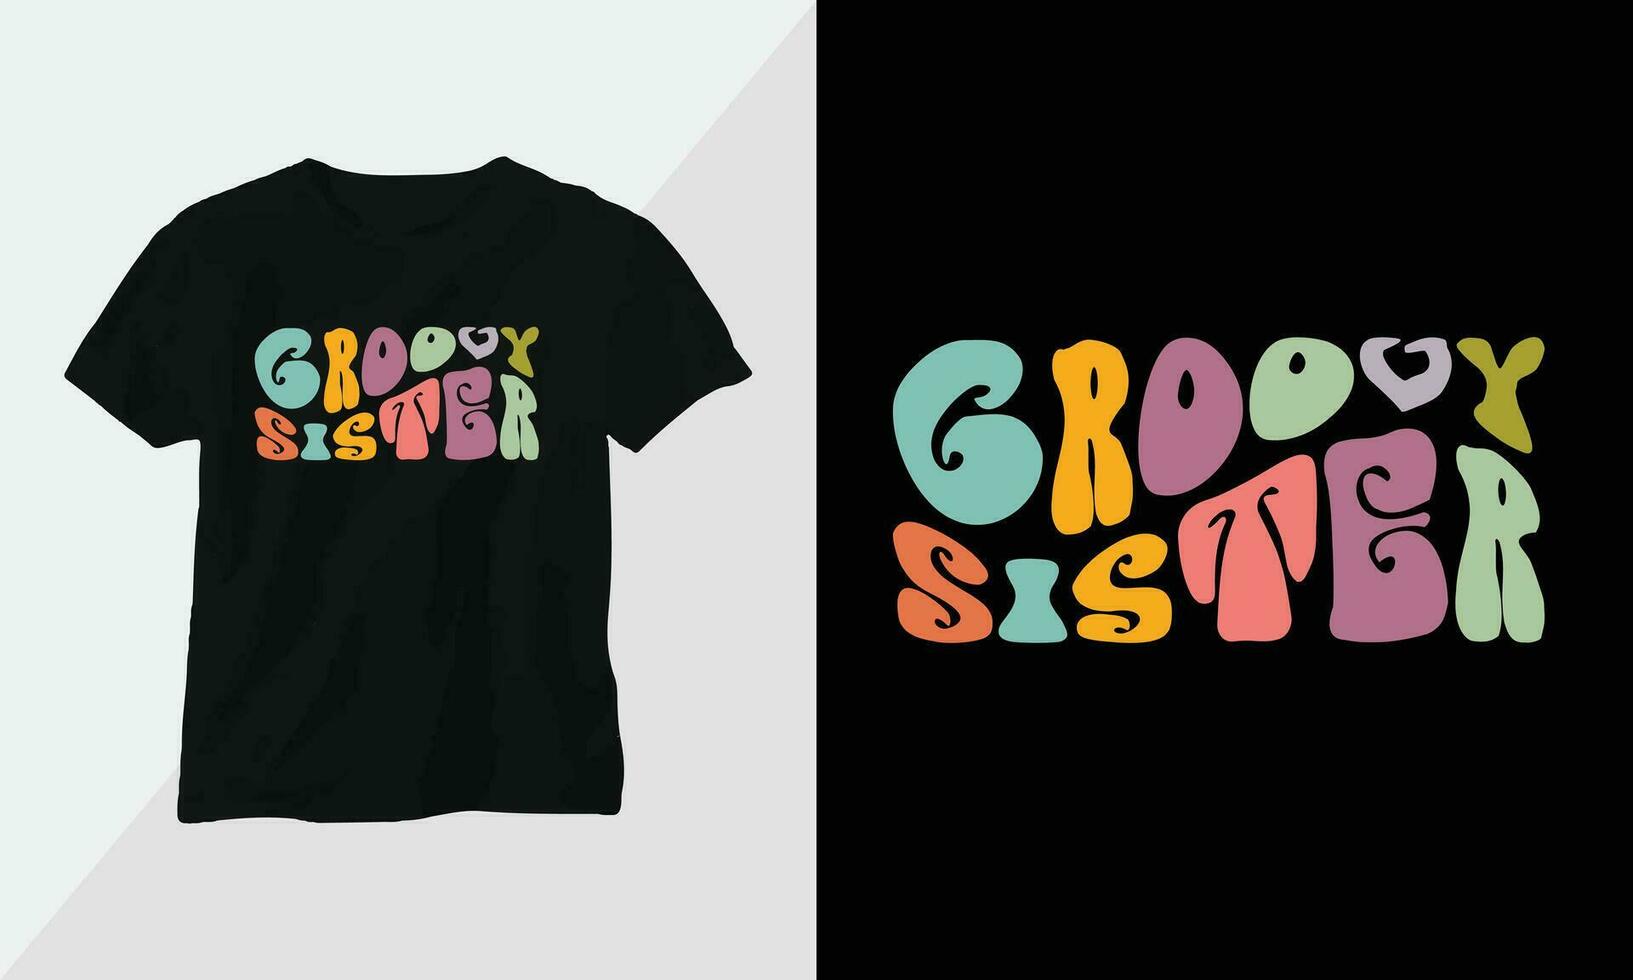 groovig Schwester - - retro groovig inspirierend T-Shirt Design mit retro Stil vektor